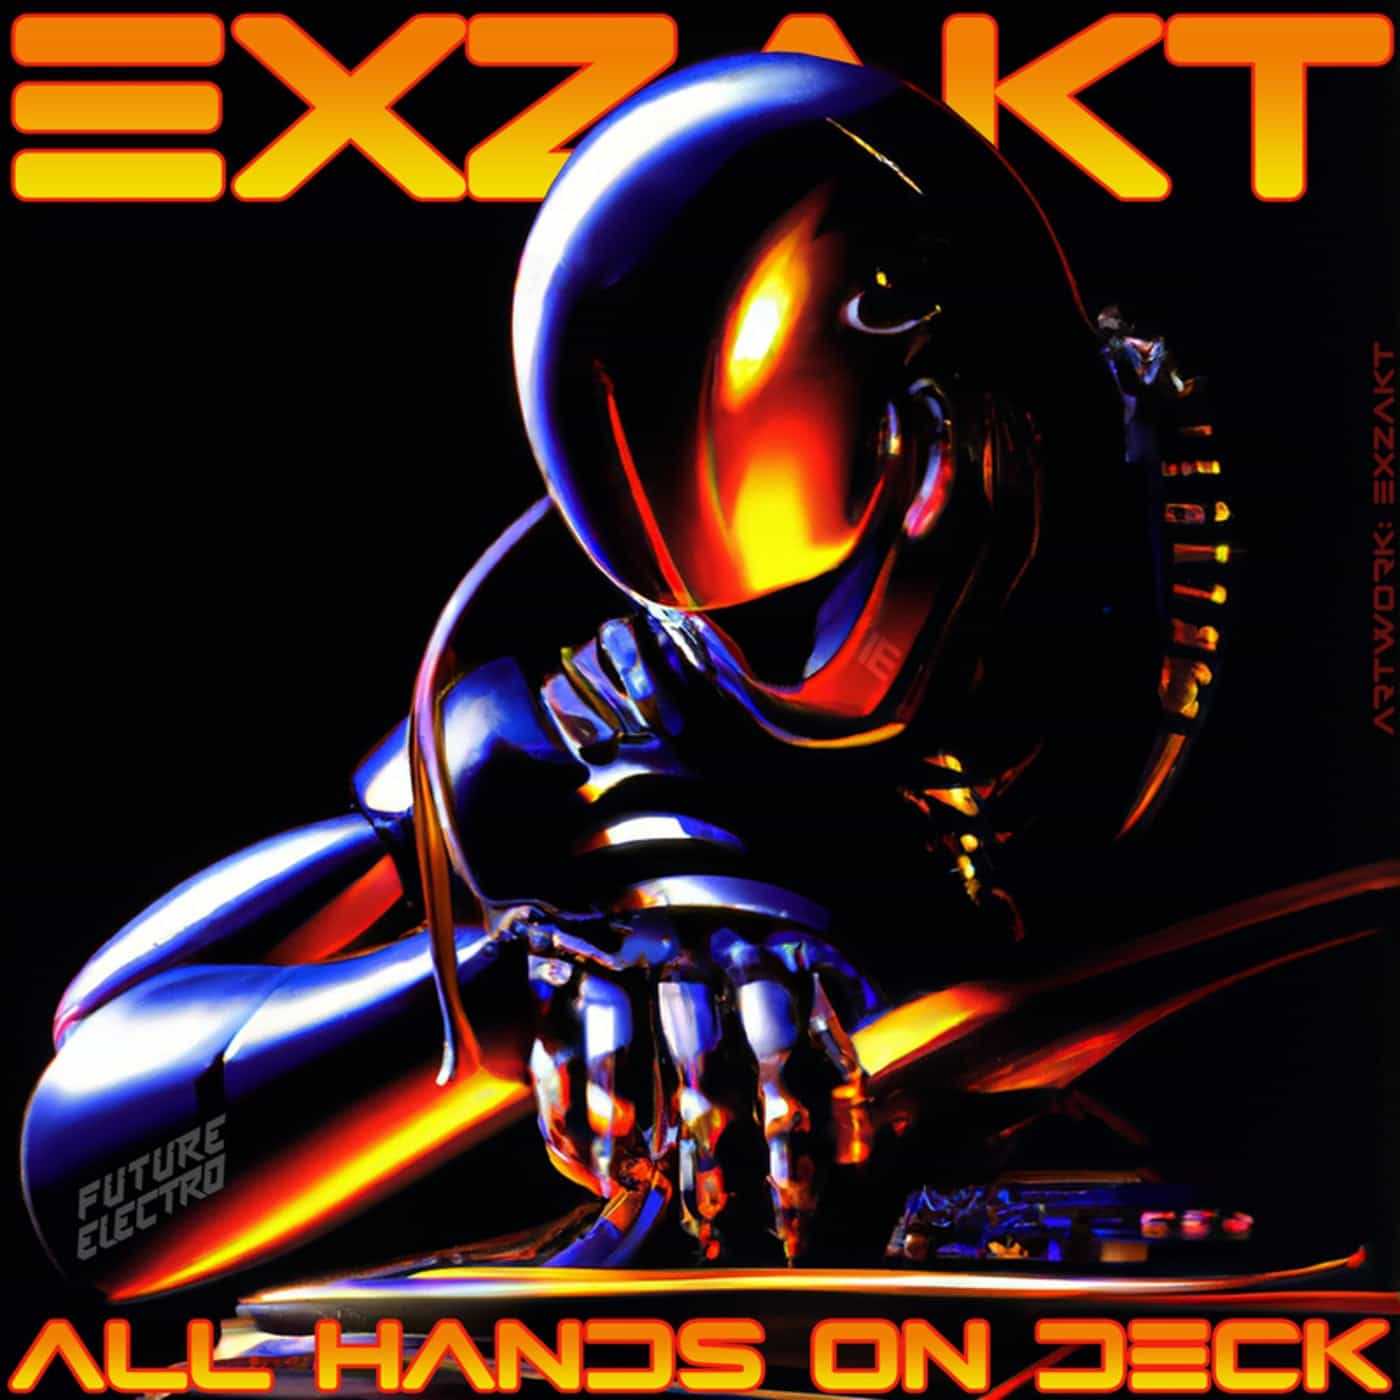 Download Exzakt, Evo, Code Rising, Sinistar, BFX - All Hands On Deck on Electrobuzz